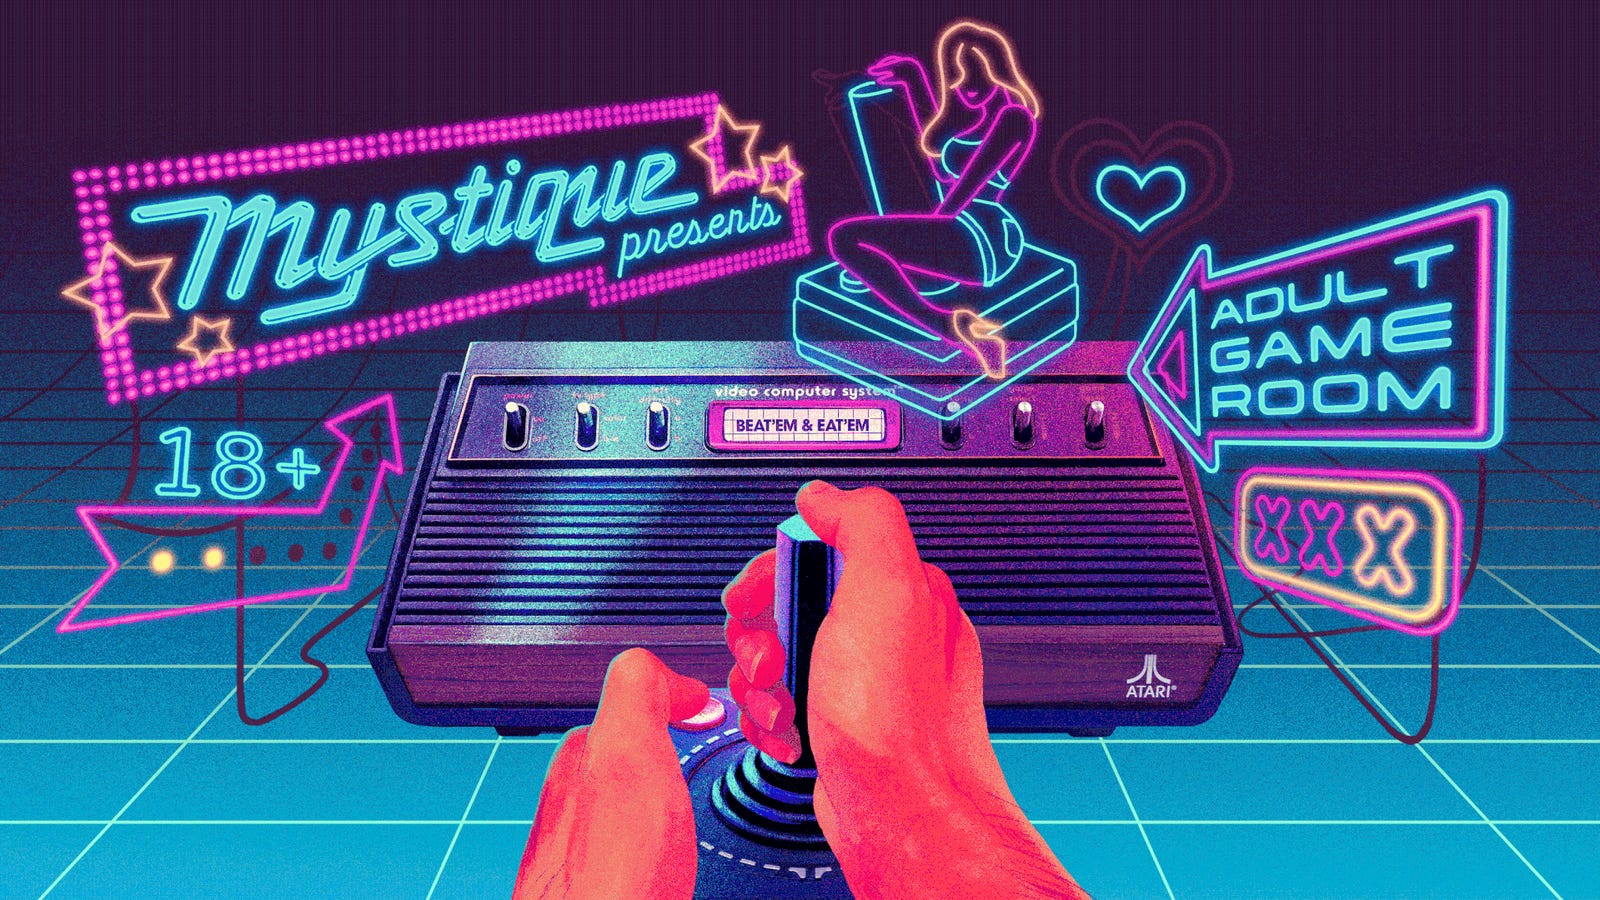 Xxx Hot Sex Se 18 Yr - Custer's Revenge And The Atari 2600 Porno Games: The Full Story